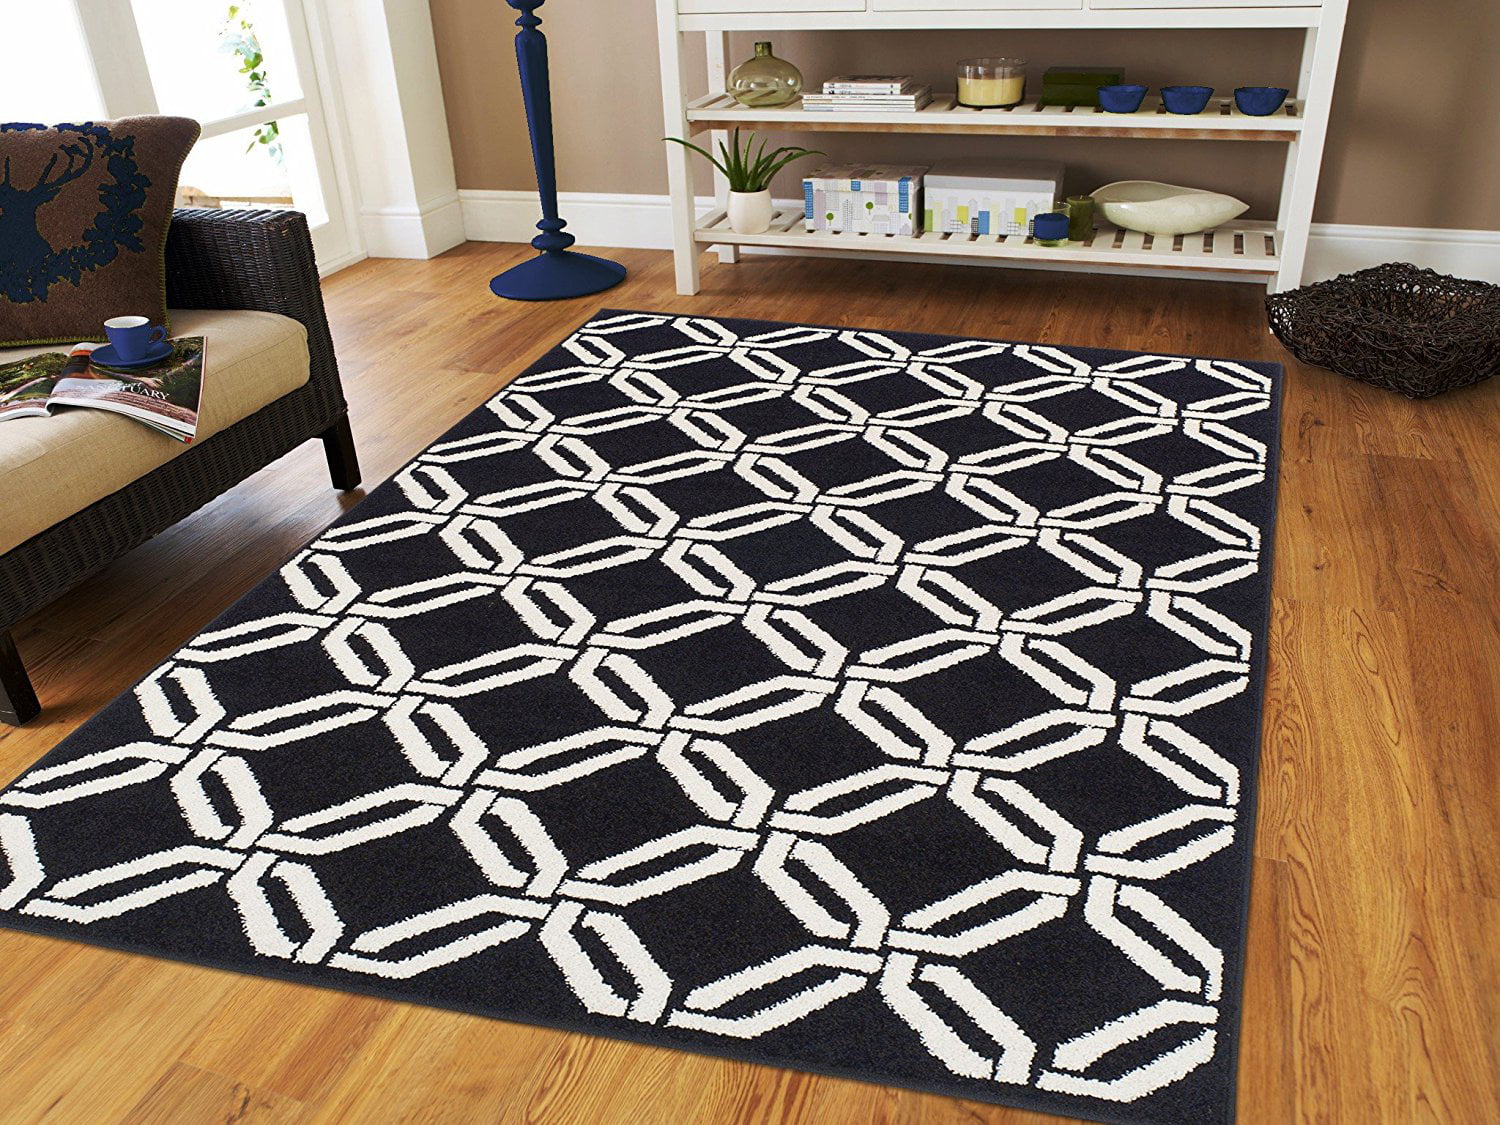 5x7 oval living room rug